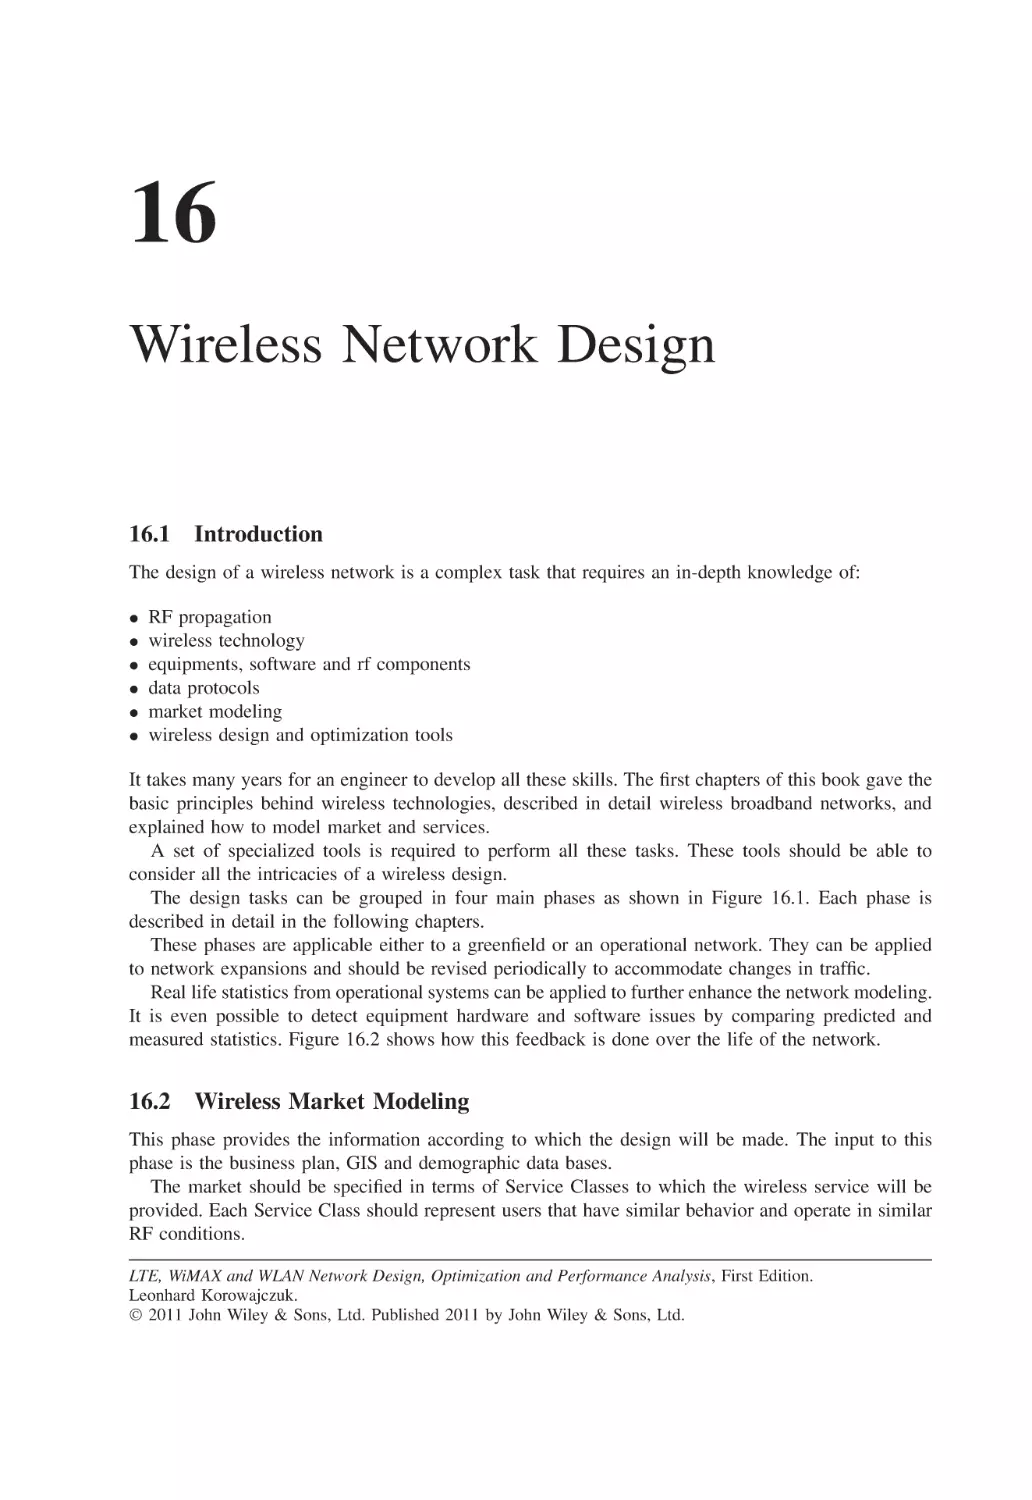 16 Wireless Network Design
16.1 Introduction
16.2 Wireless Market Modeling